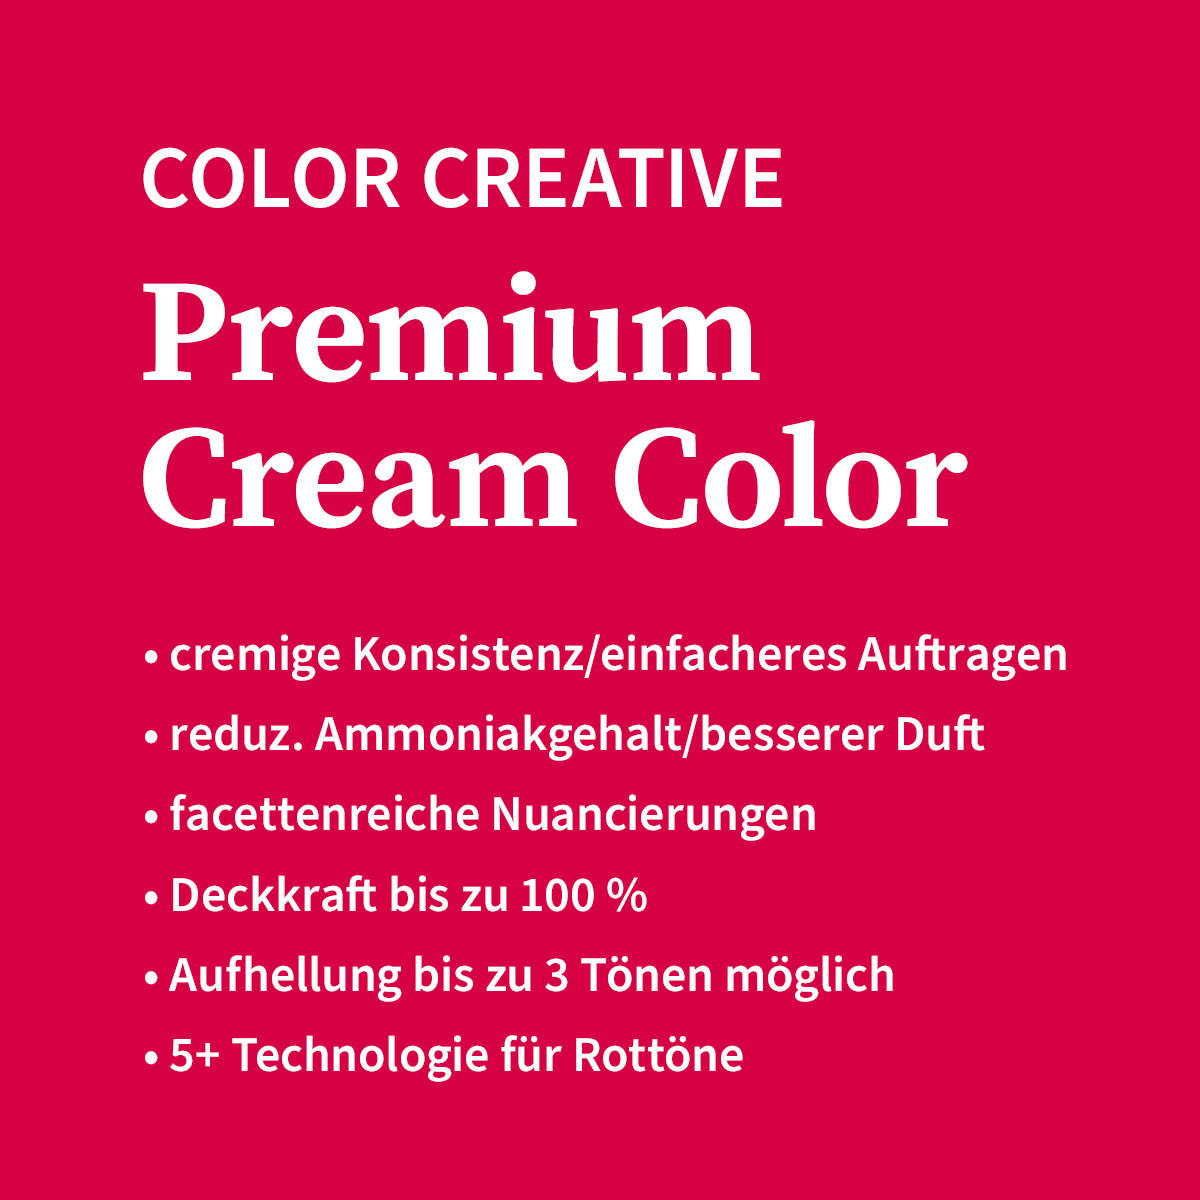 Basler Color Creative Premium Cream Color 6/43 dunkelblond rot gold, Tube 60 ml - 4